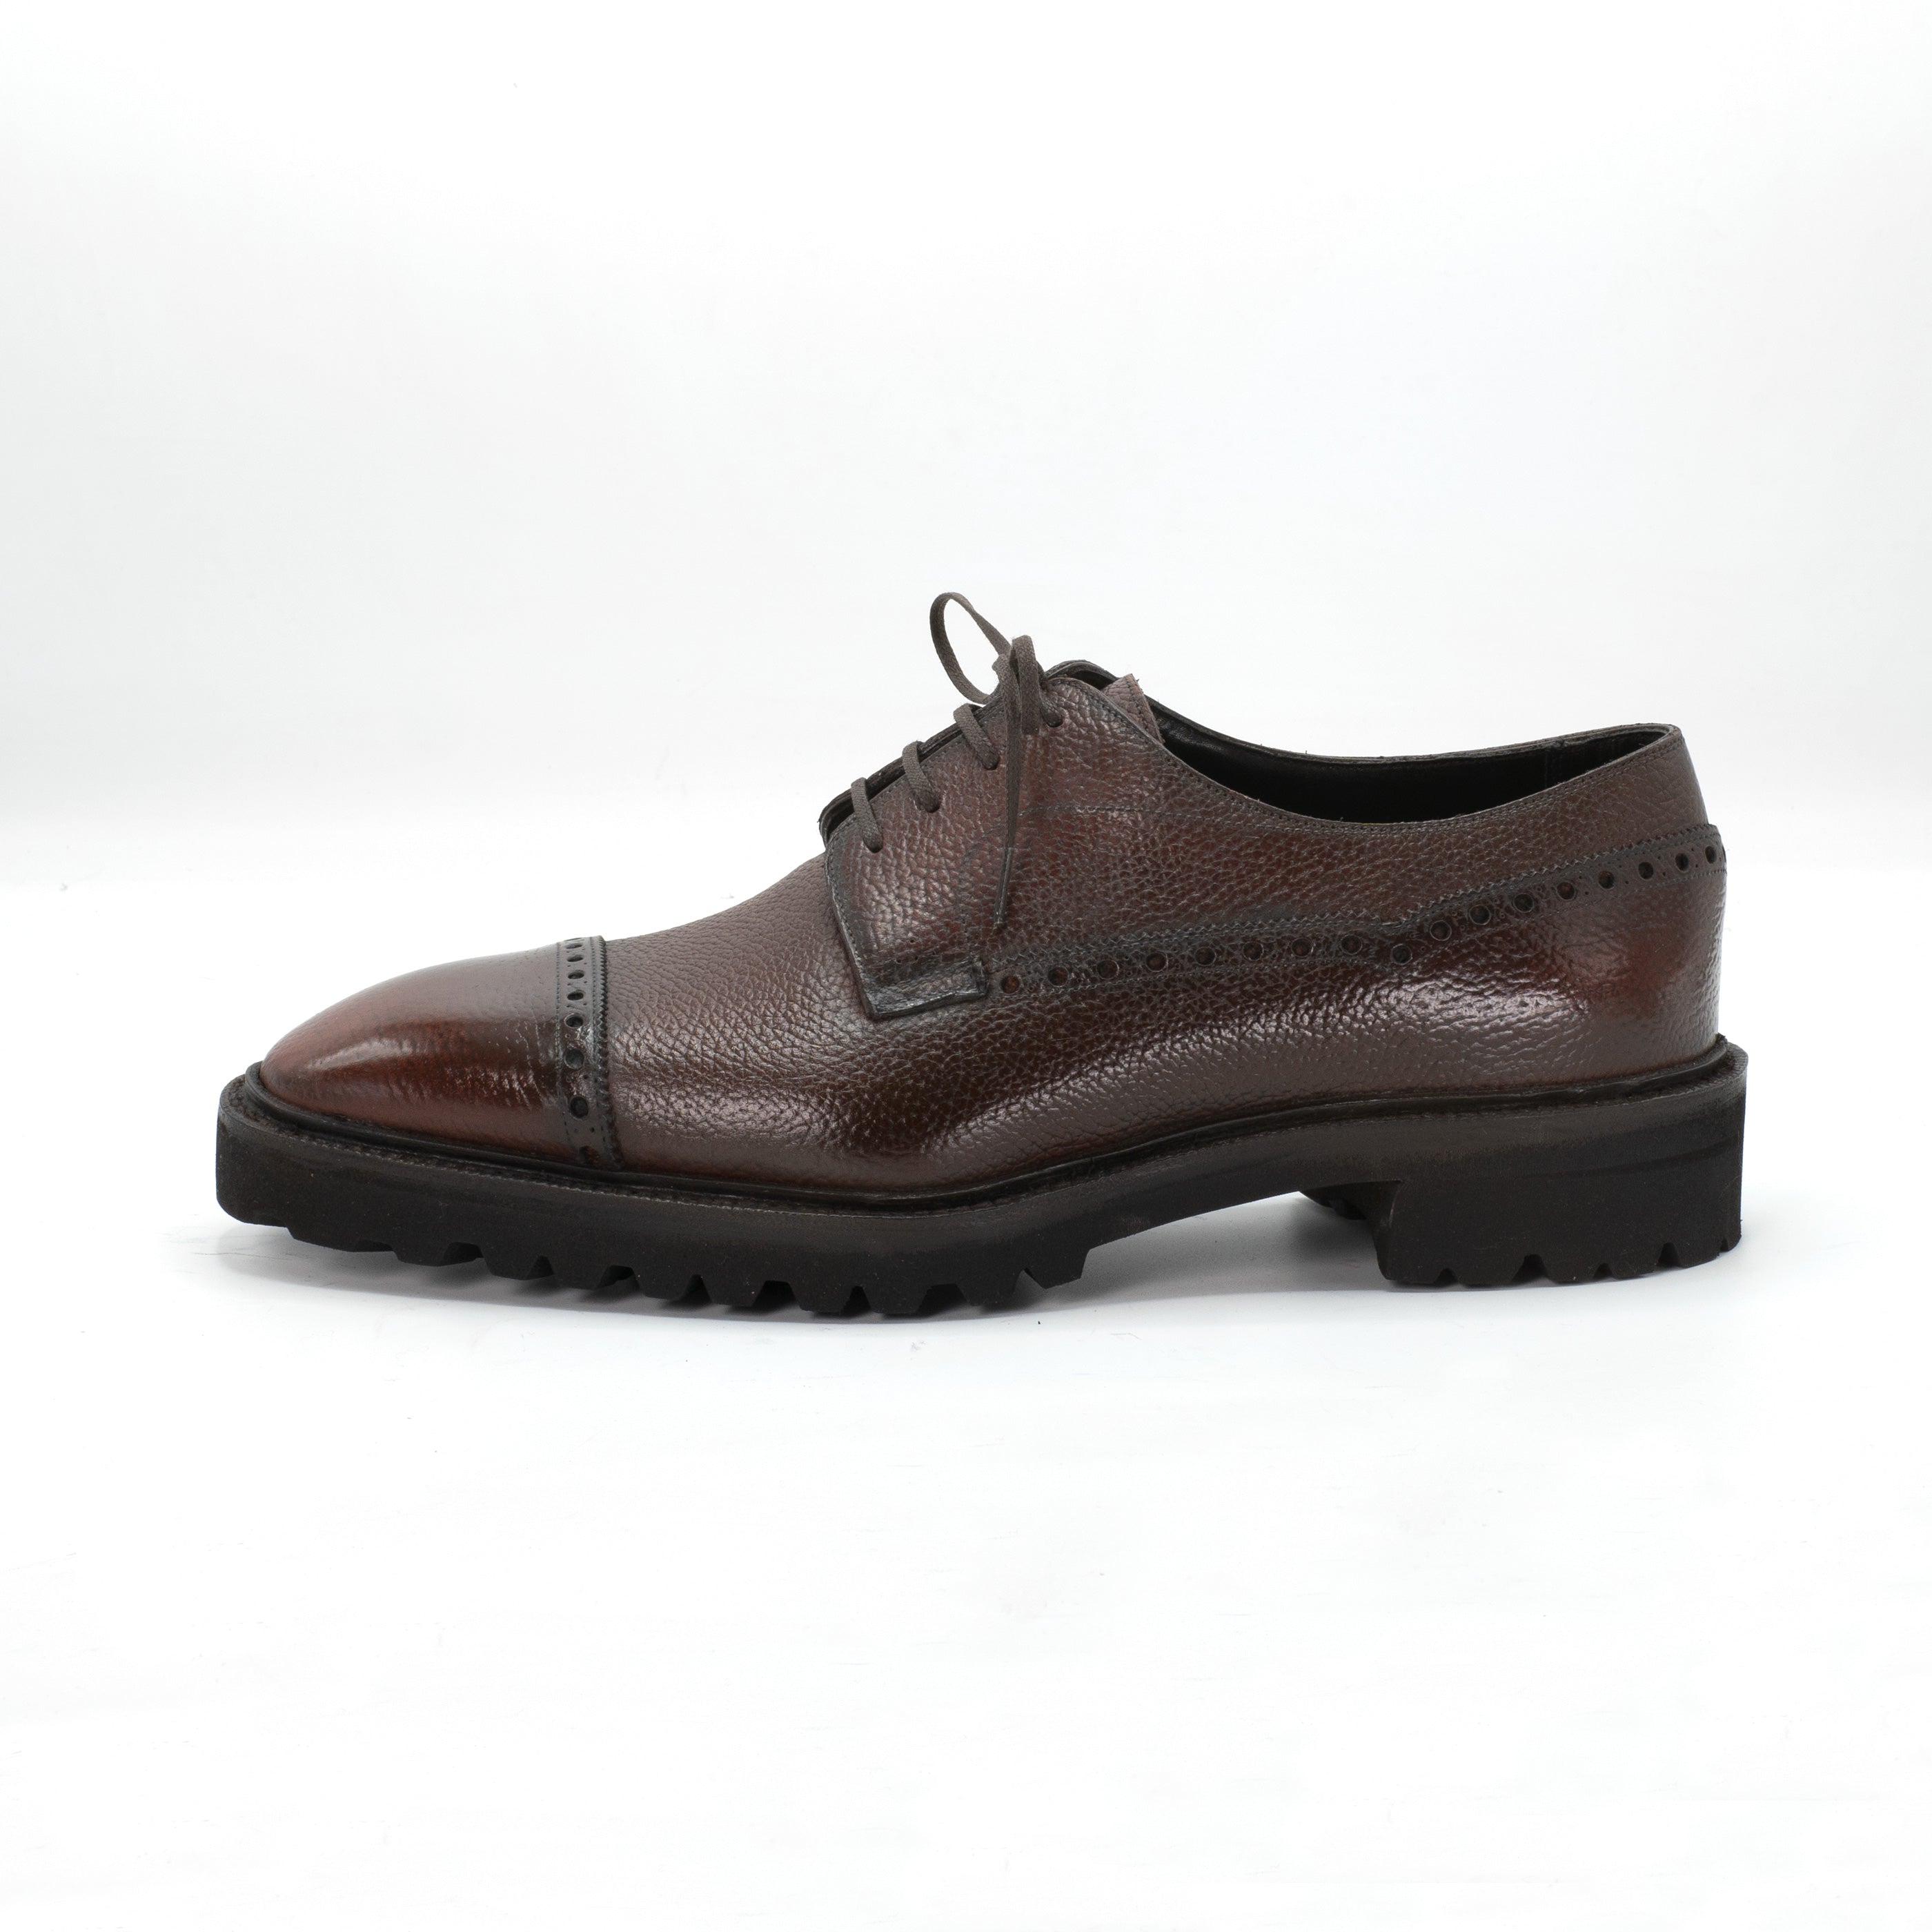 Luis Balmoral Derby Shoe by Norman Vilalta Bespoke Shoemakers